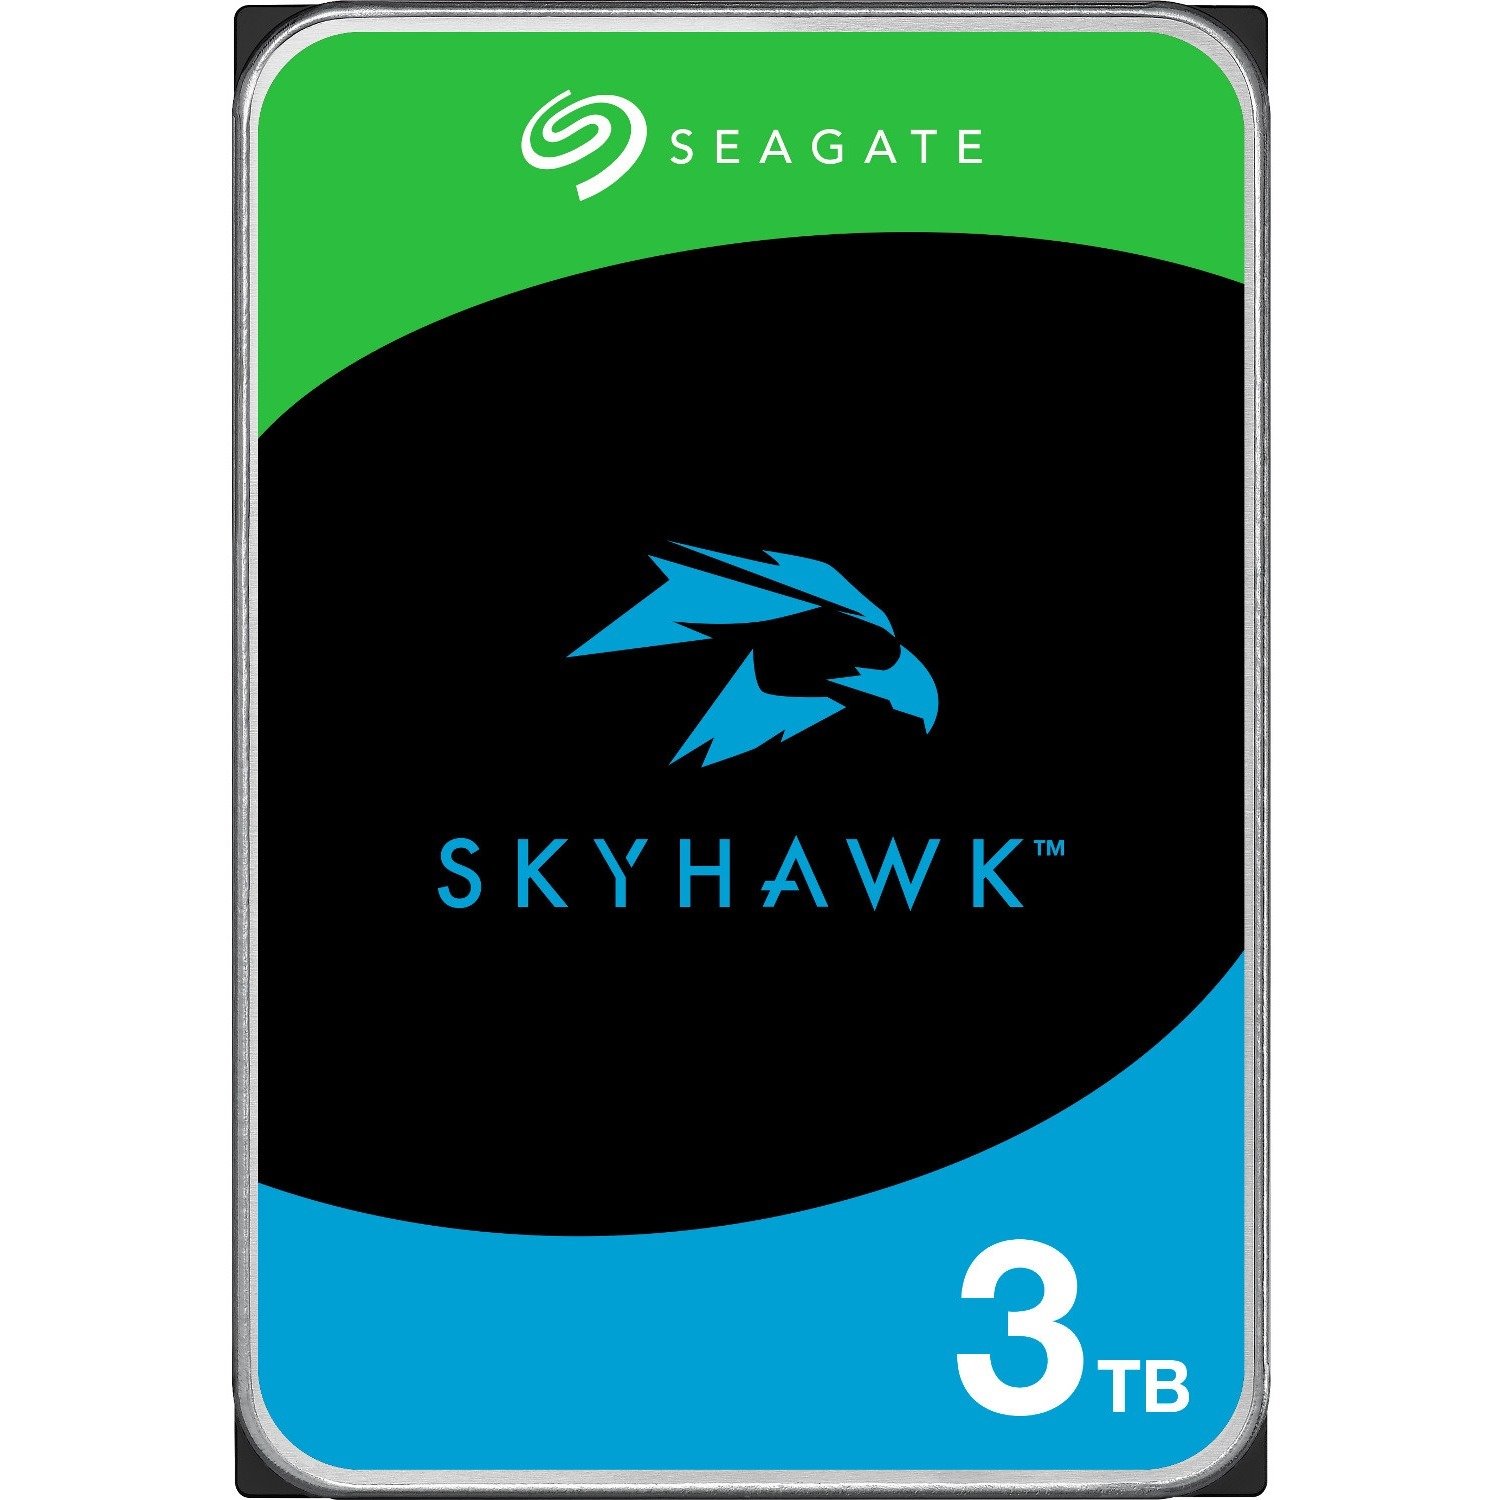 Seagate SkyHawk ST3000VX015 3 TB Hard Drive - 3.5" Internal - SATA (SATA/600) - Conventional Magnetic Recording (CMR) Method